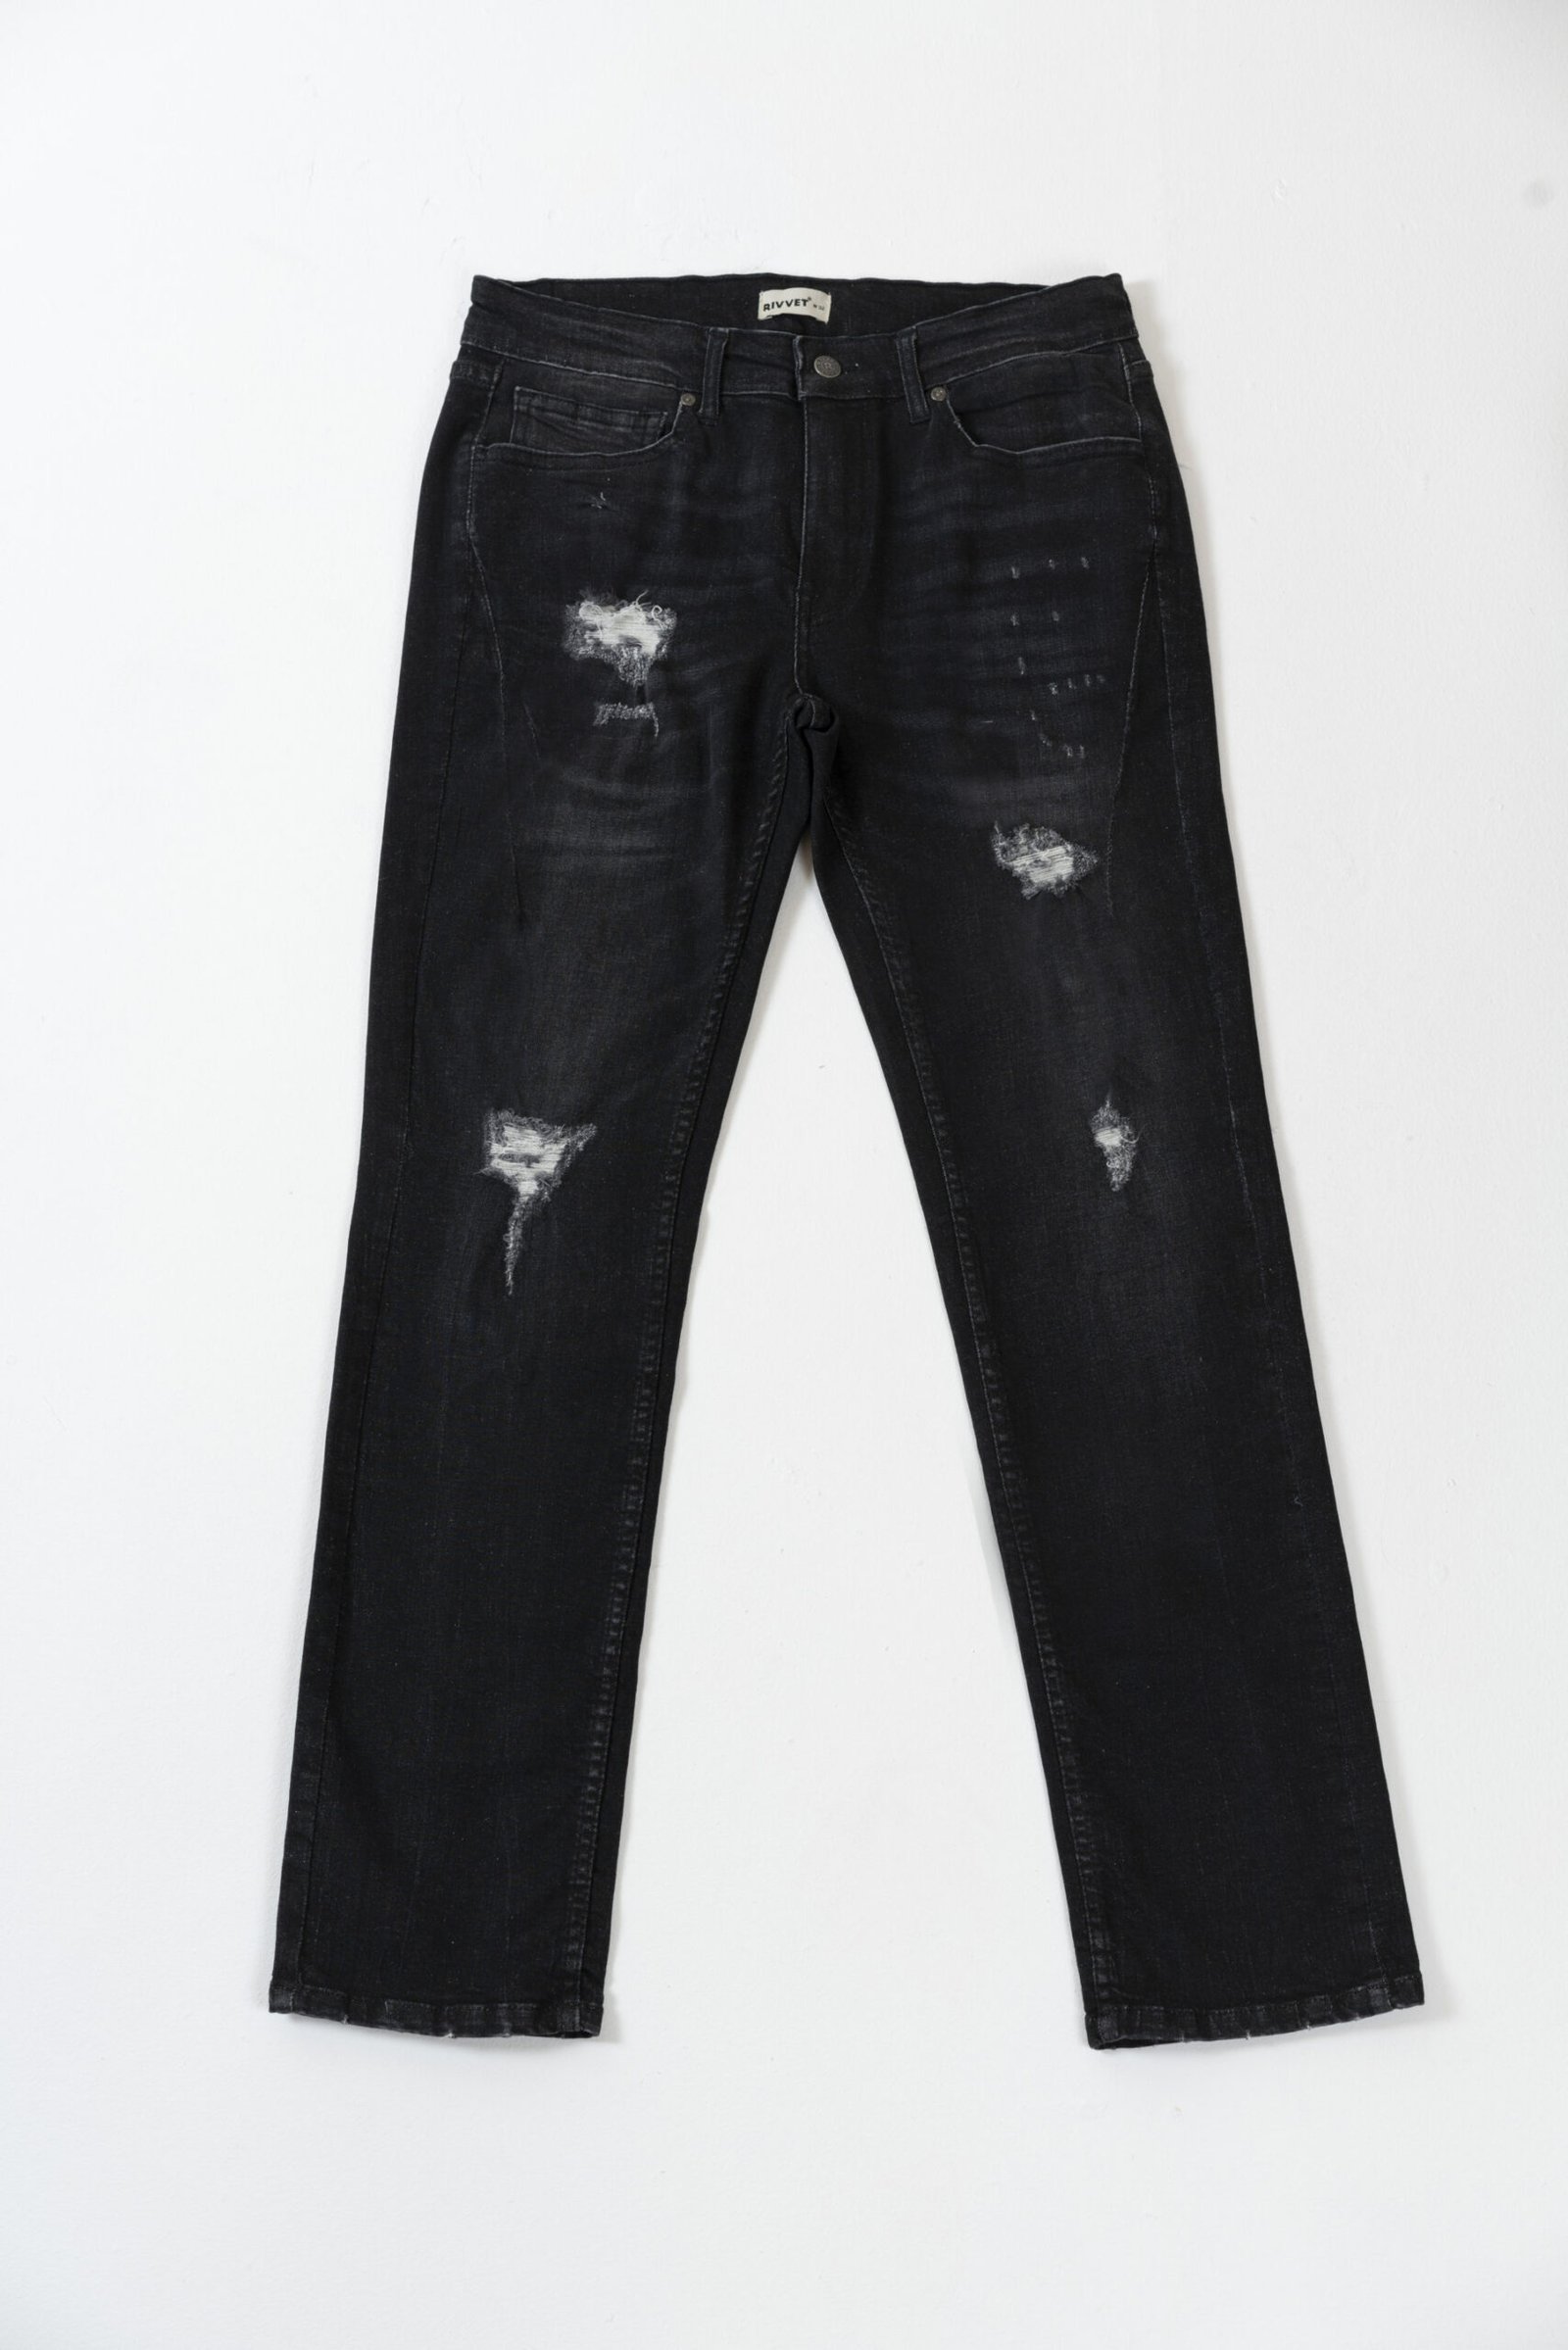 Women's Ripped Denim Pants Casual Bell Bottom Jeans for Women –  PinkQueenShop